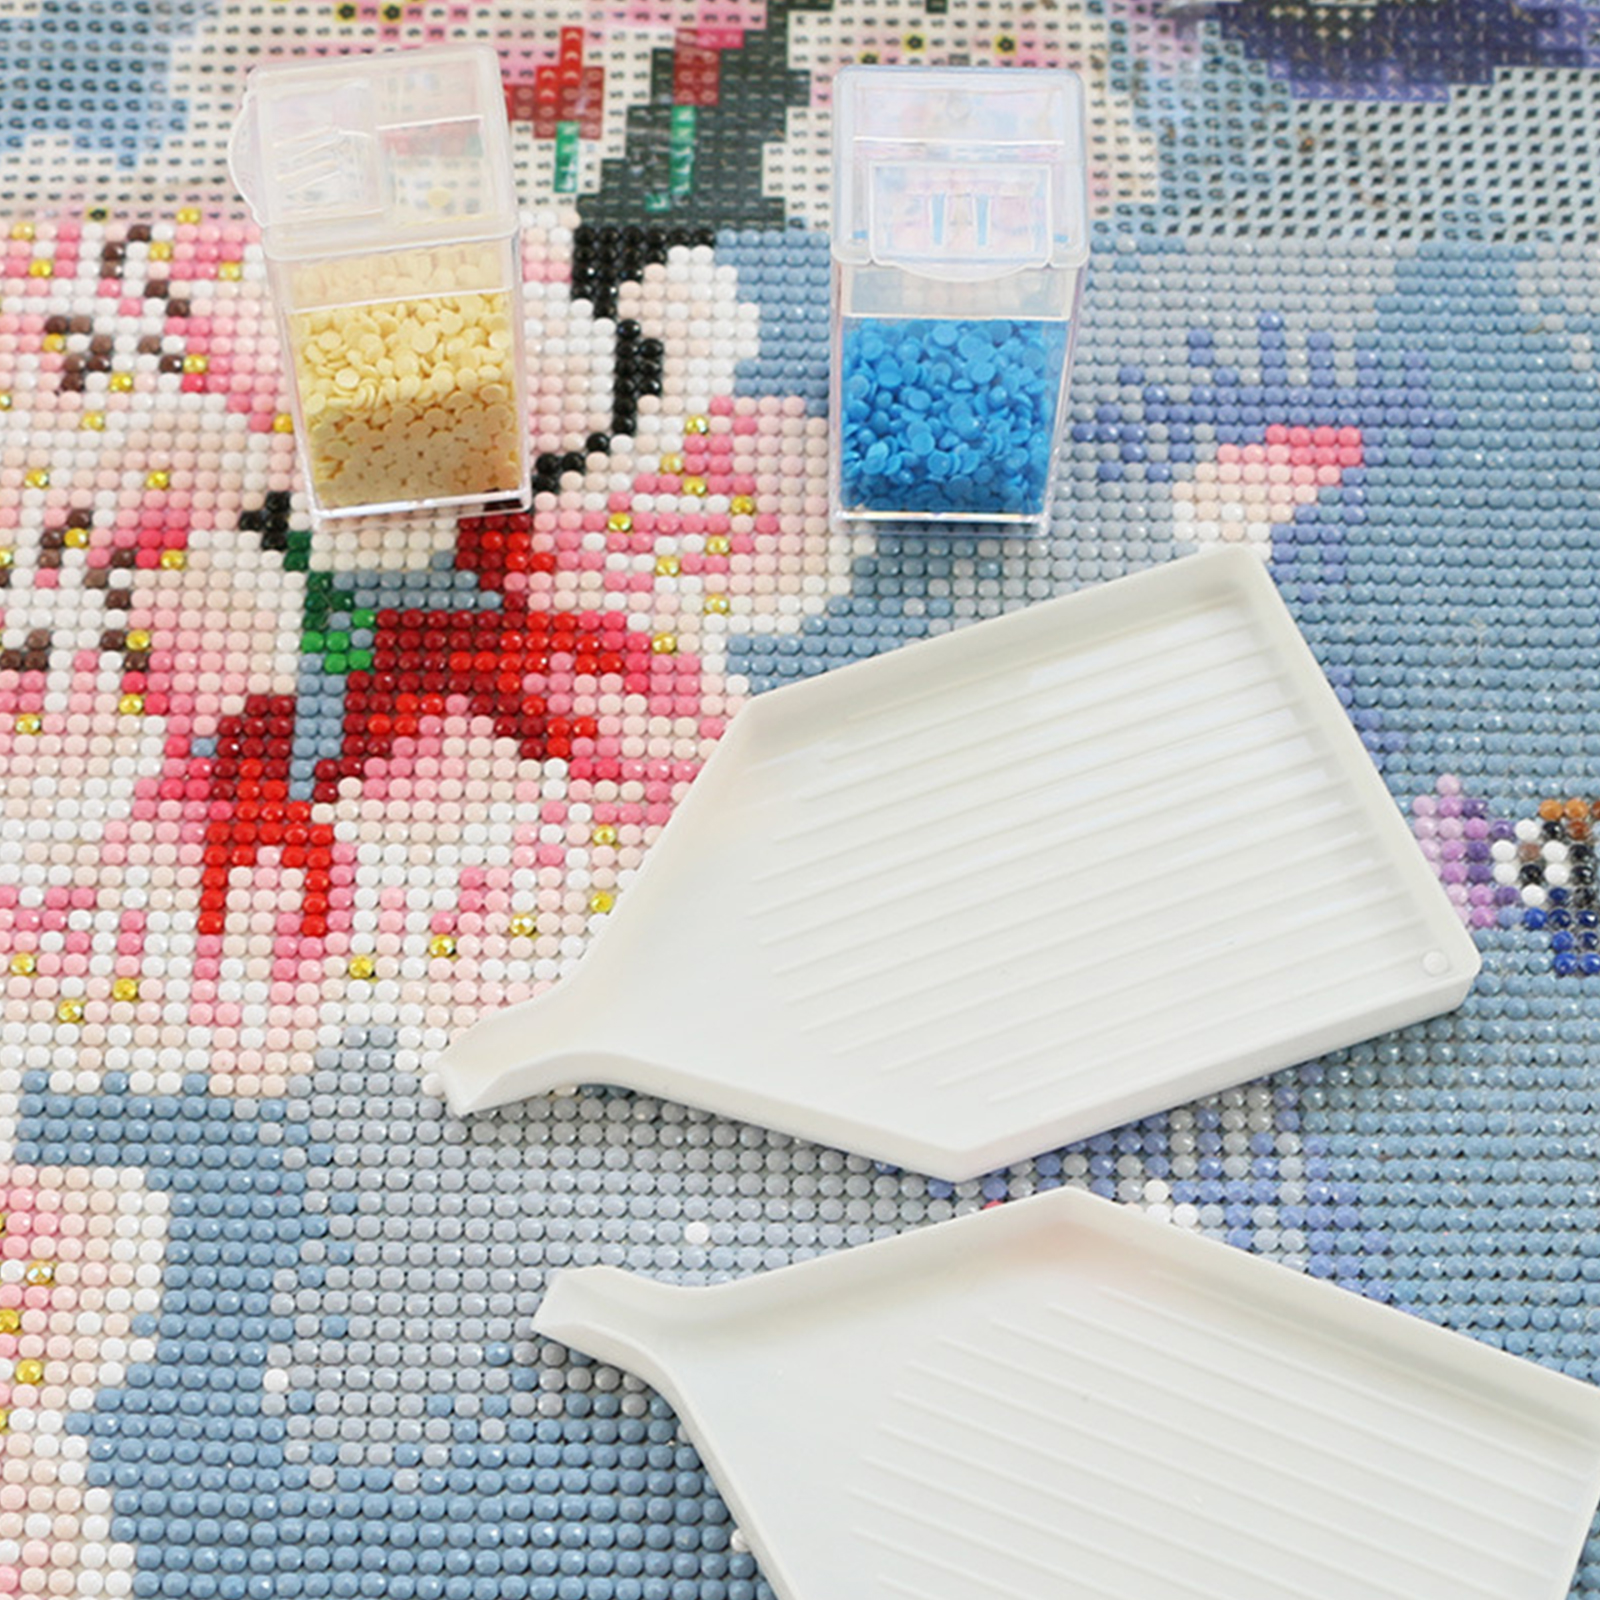 meijuhuga Cross Stitch Trays 5D 1 Set Easy to Catch Diamond Painting Tray  Set Portable Creative for Kids 